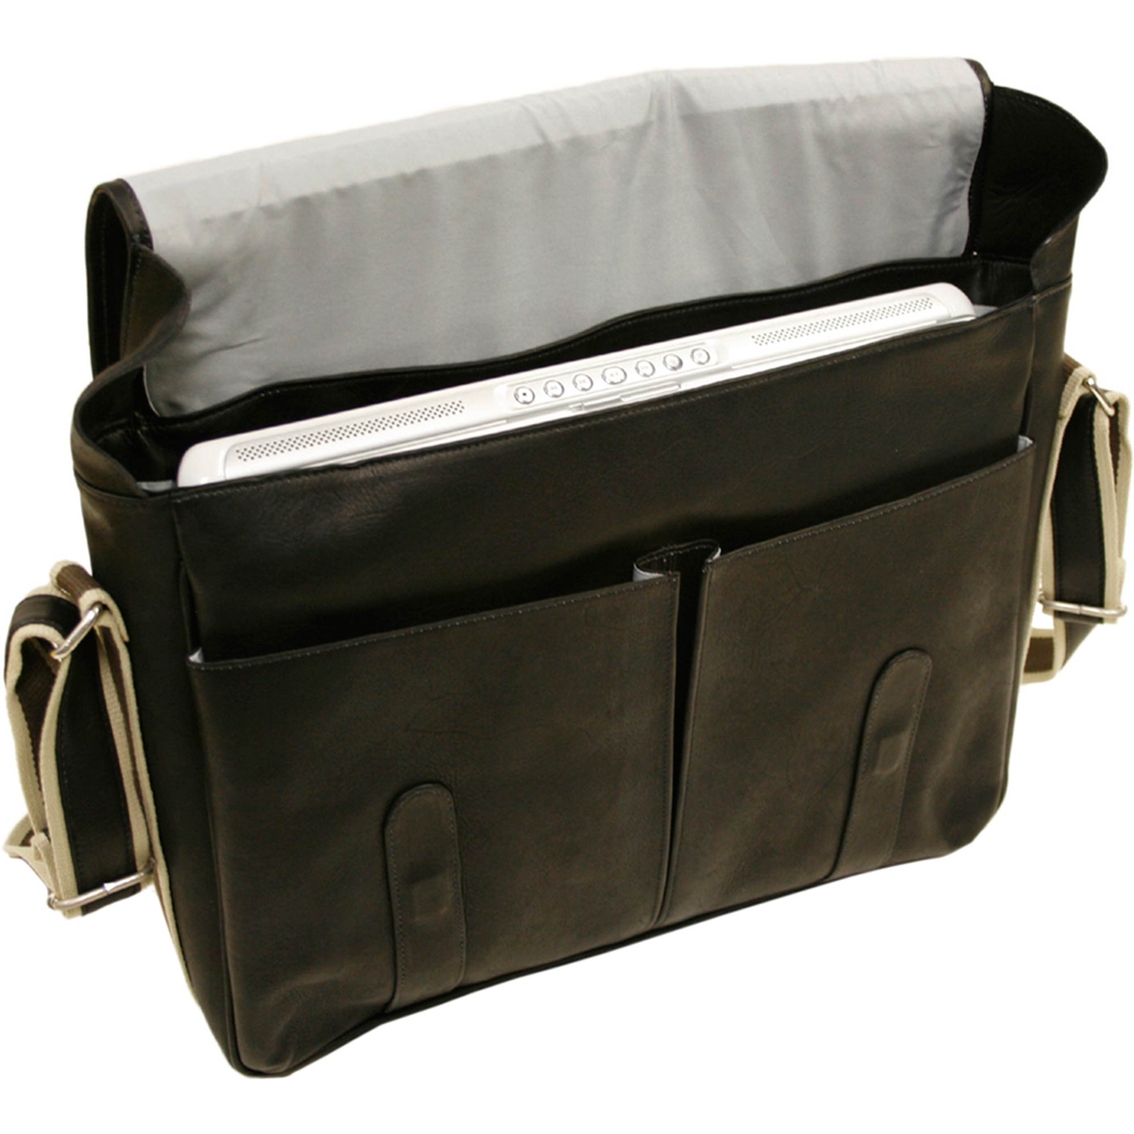 Piel Leather Classic Expandable Messenger Bag - Image 3 of 3